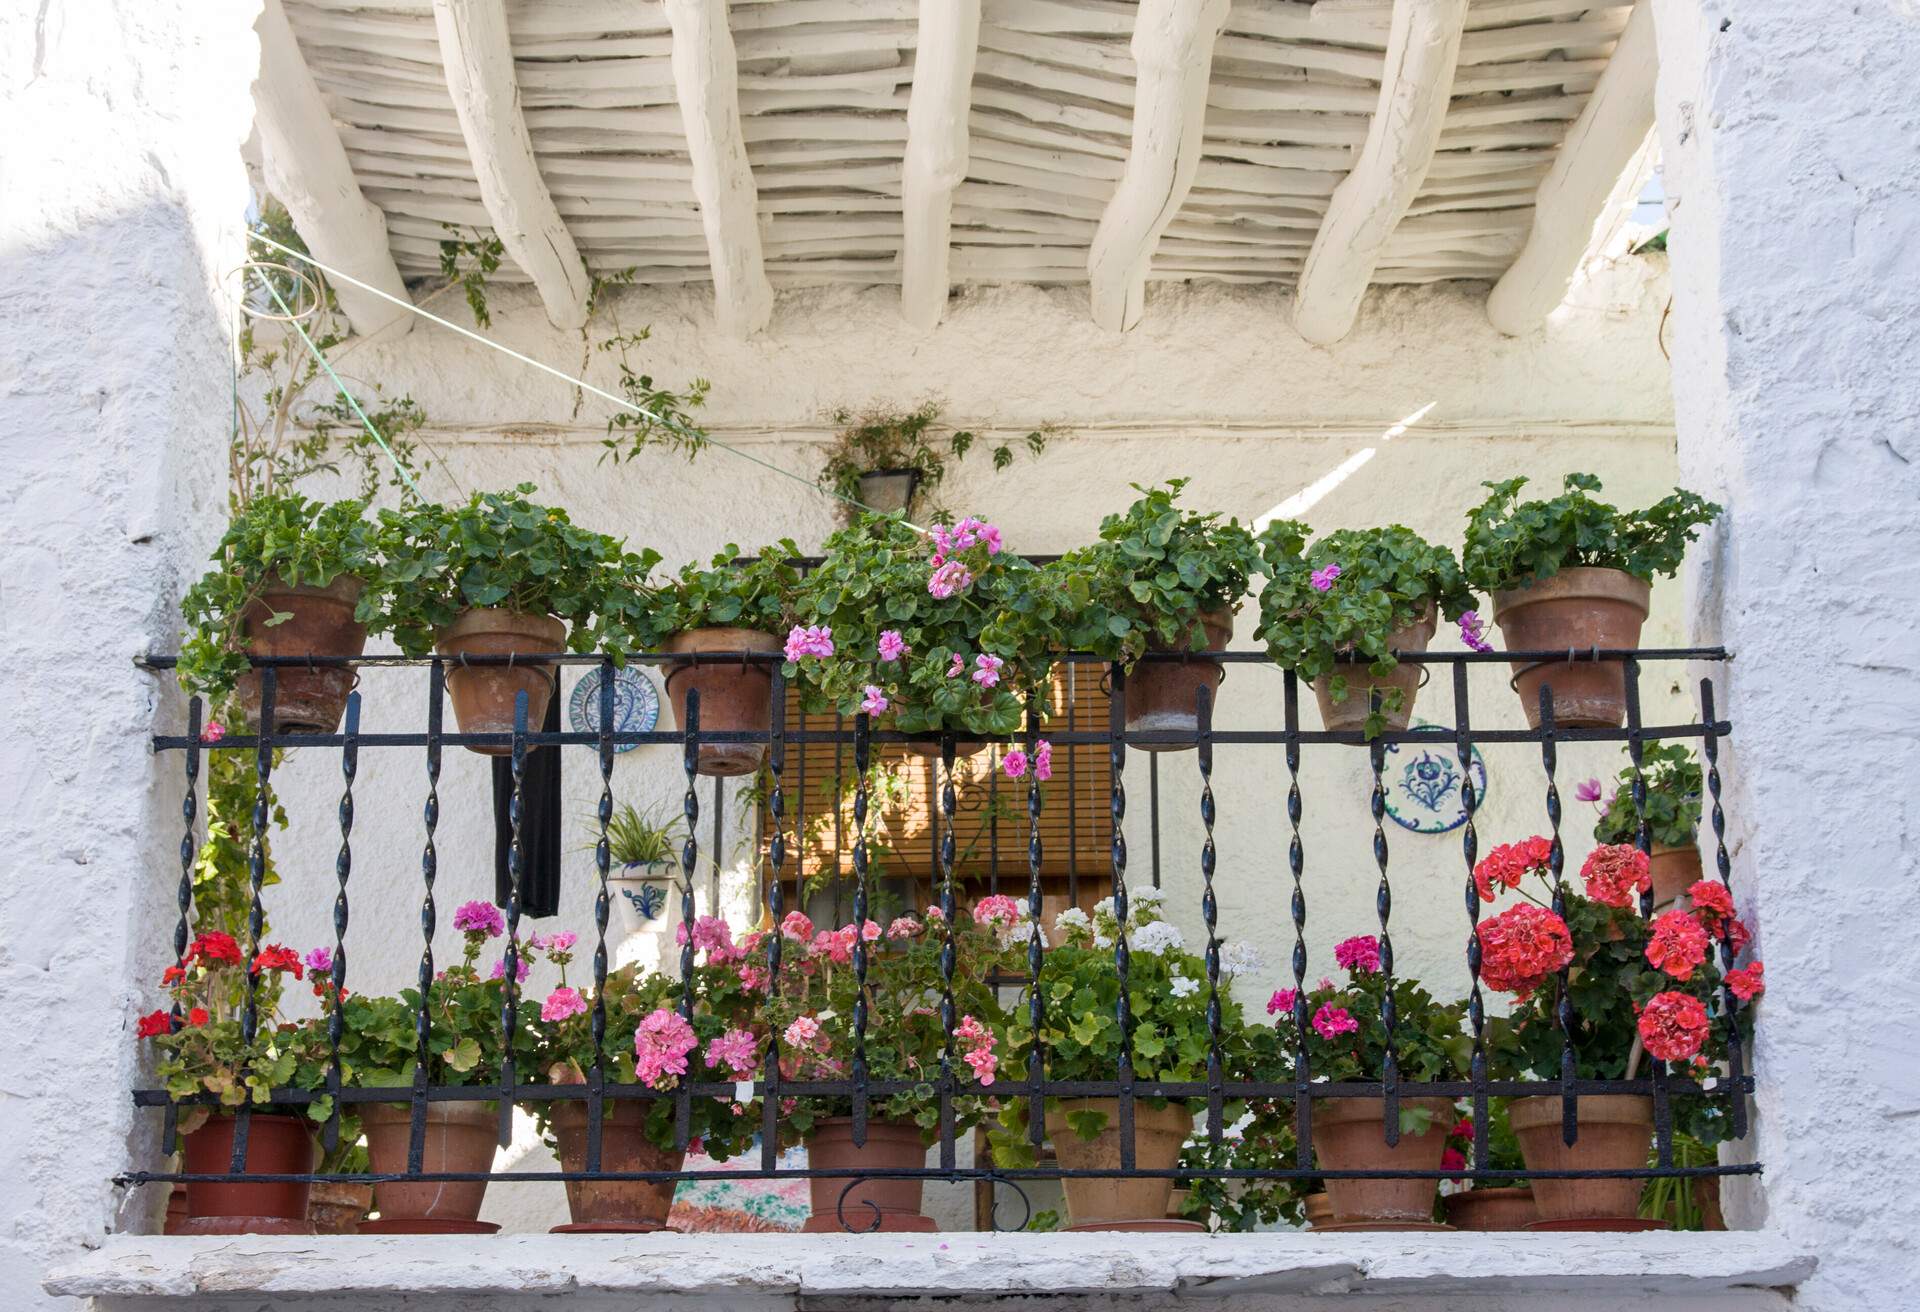 Balcony full of flowers in village of Pampaneira, Las Alpujarras, Granada, Andalusia, Spain.